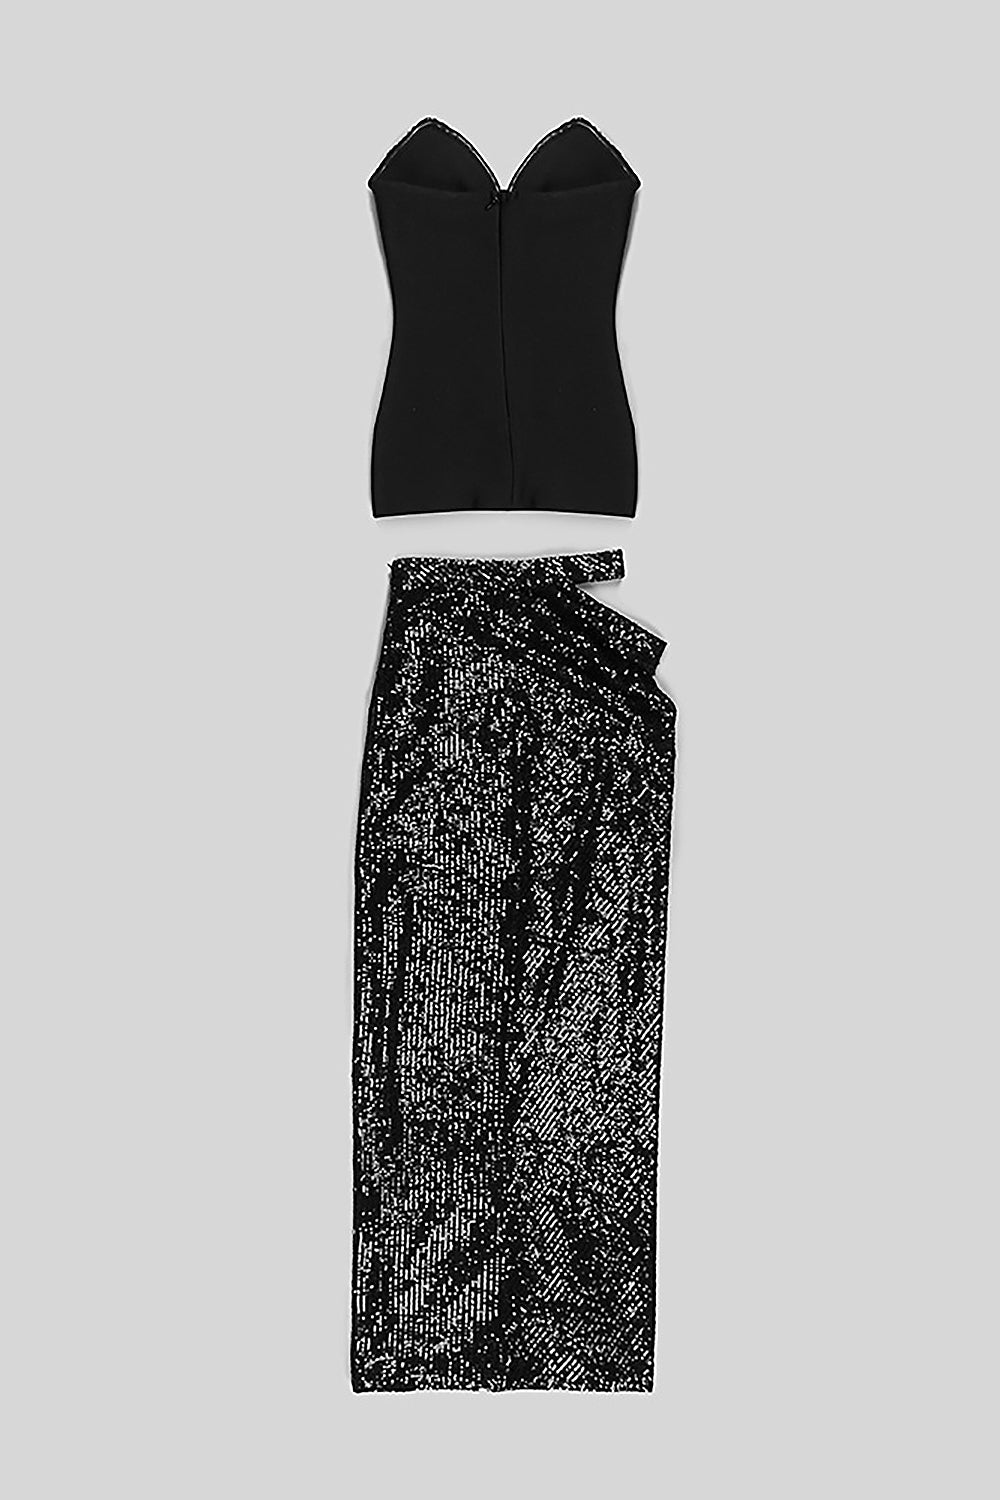 Shiny Sequins Strapless Top Split Skirts